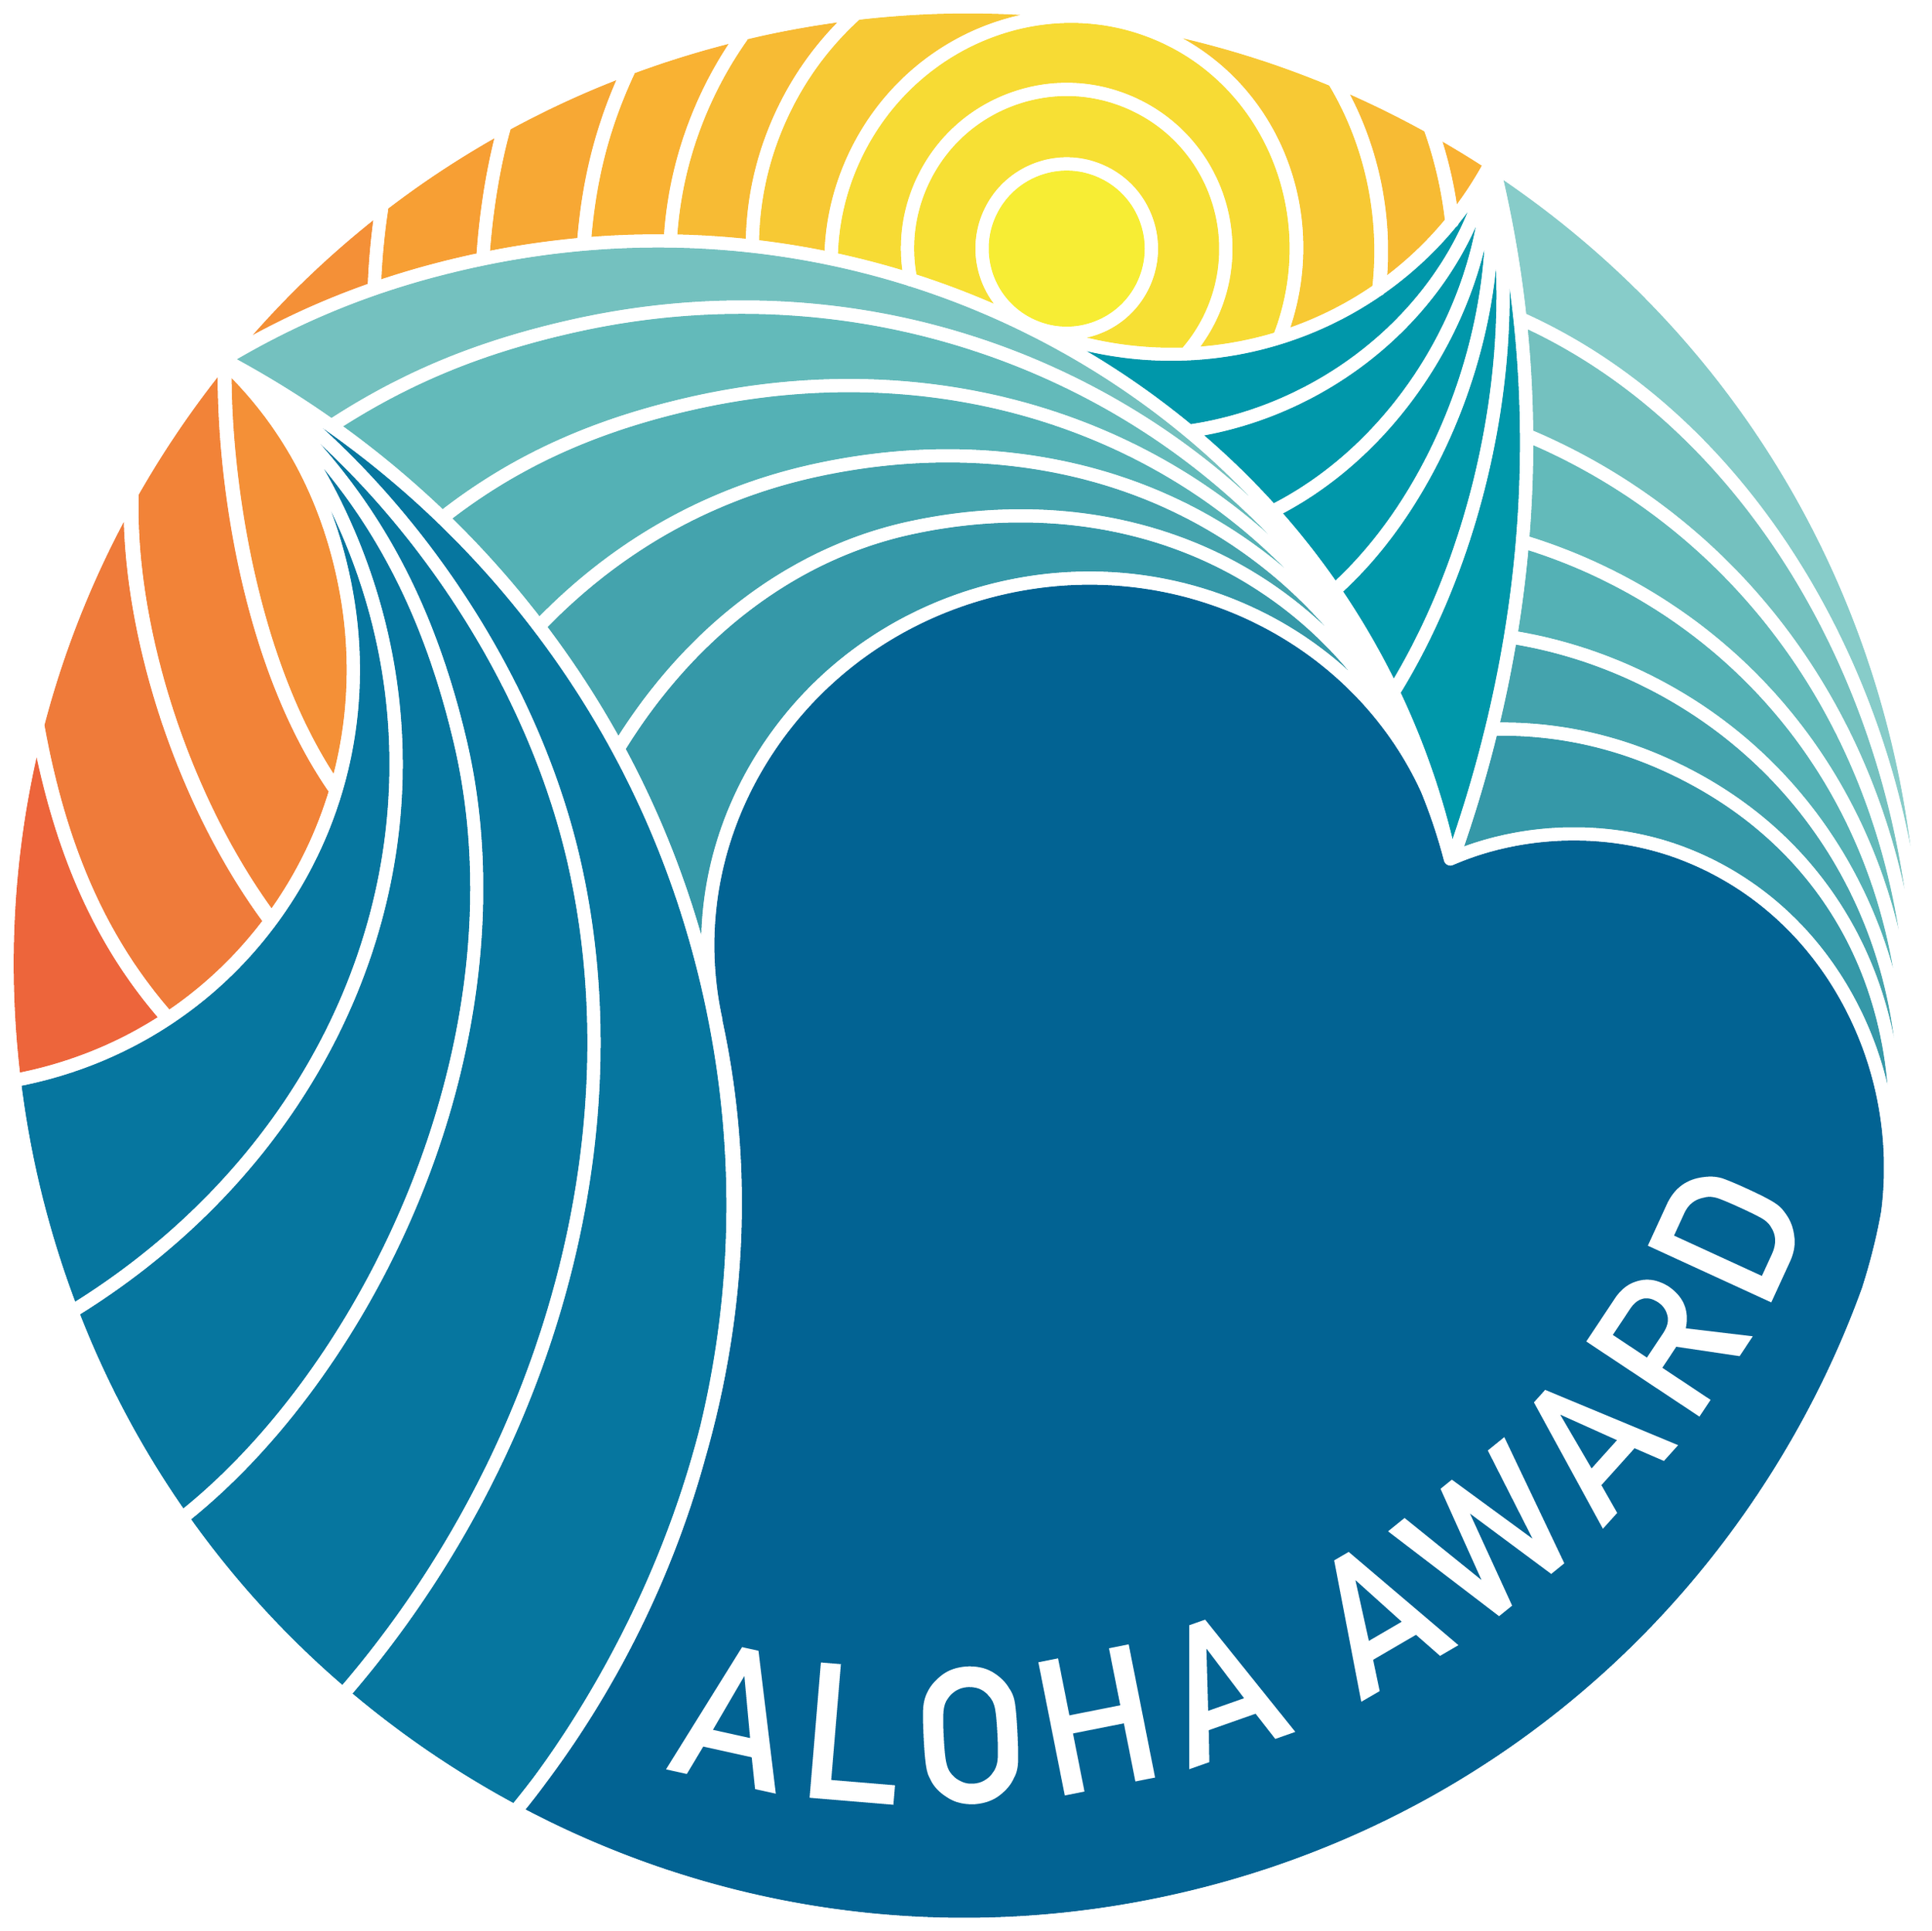 The Aloha Award